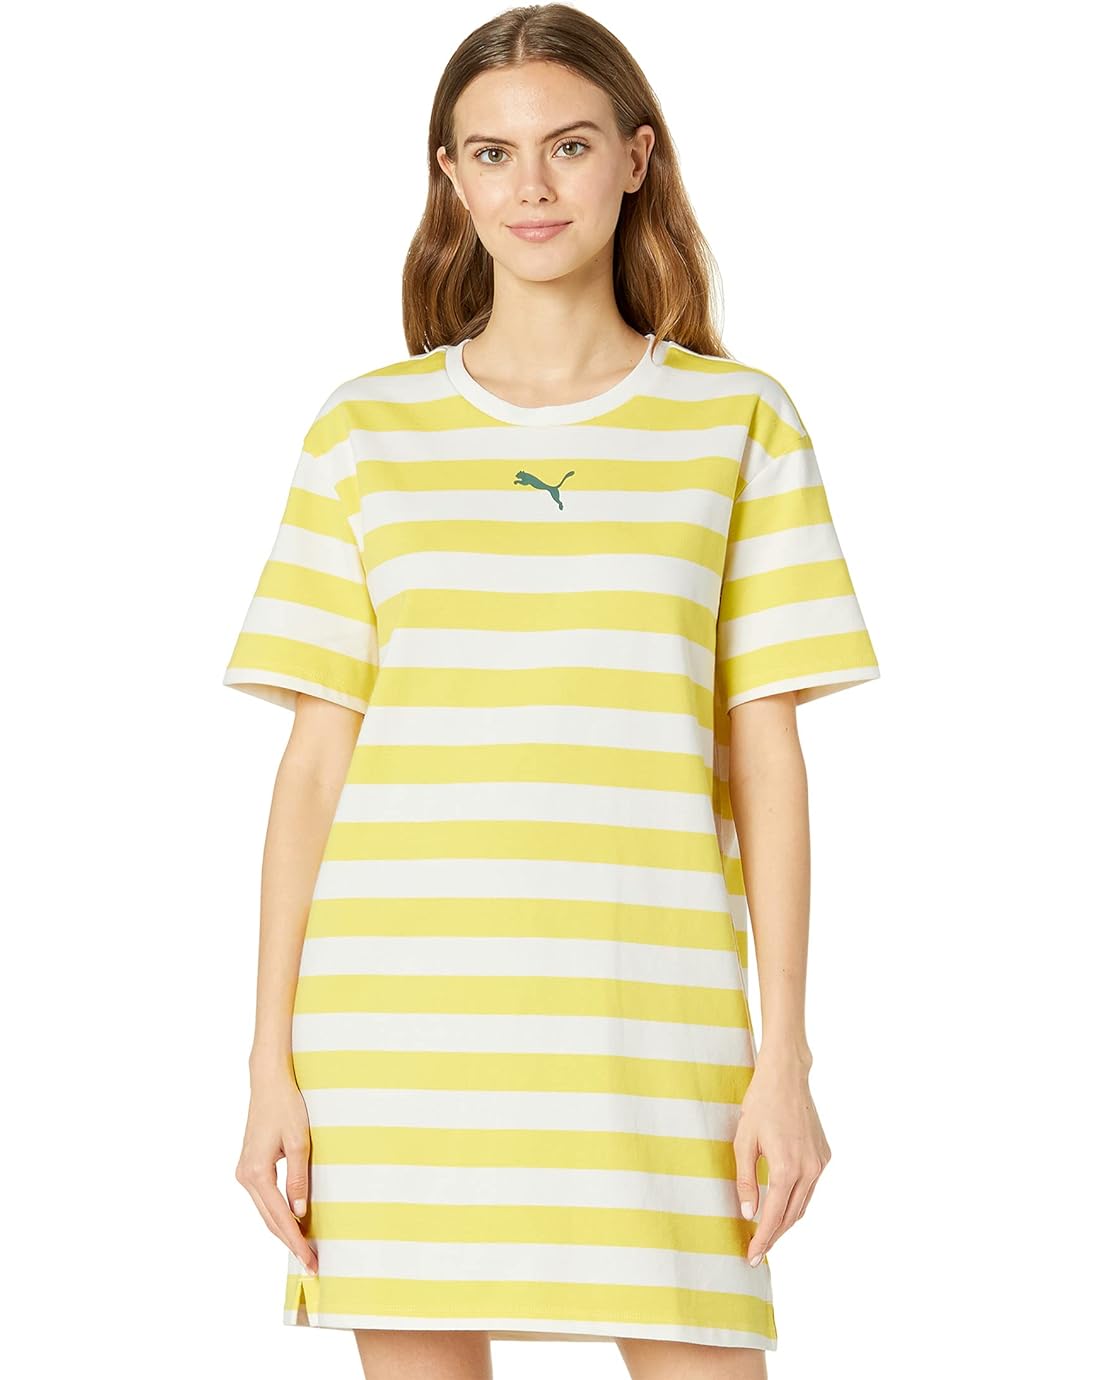 PUMA Summer Stripes All Over Print Dress